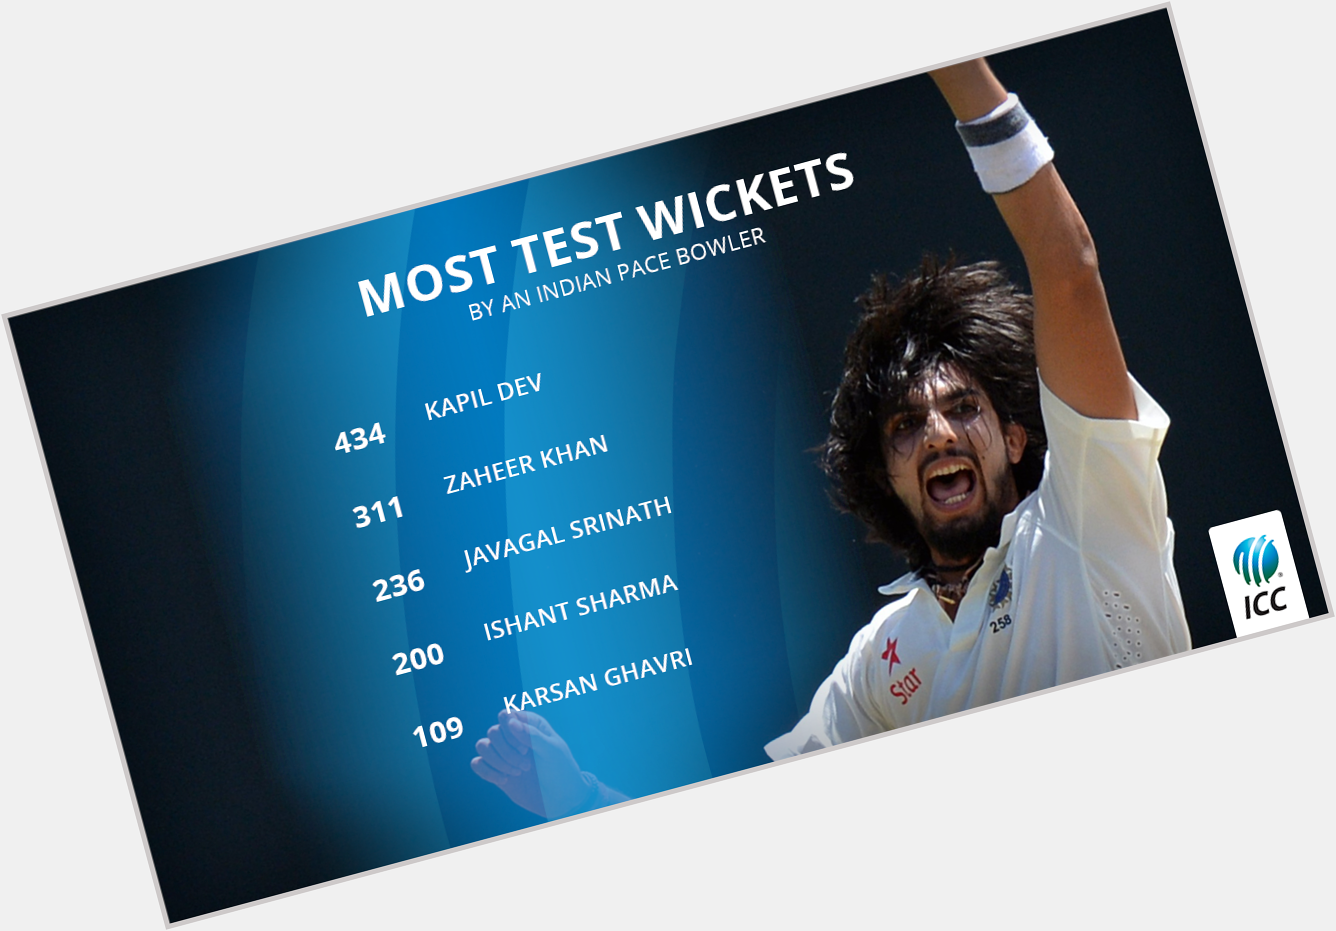 Happy Birthday to the latest member of the 200 Test wickets club,
Ishant Sharma!
